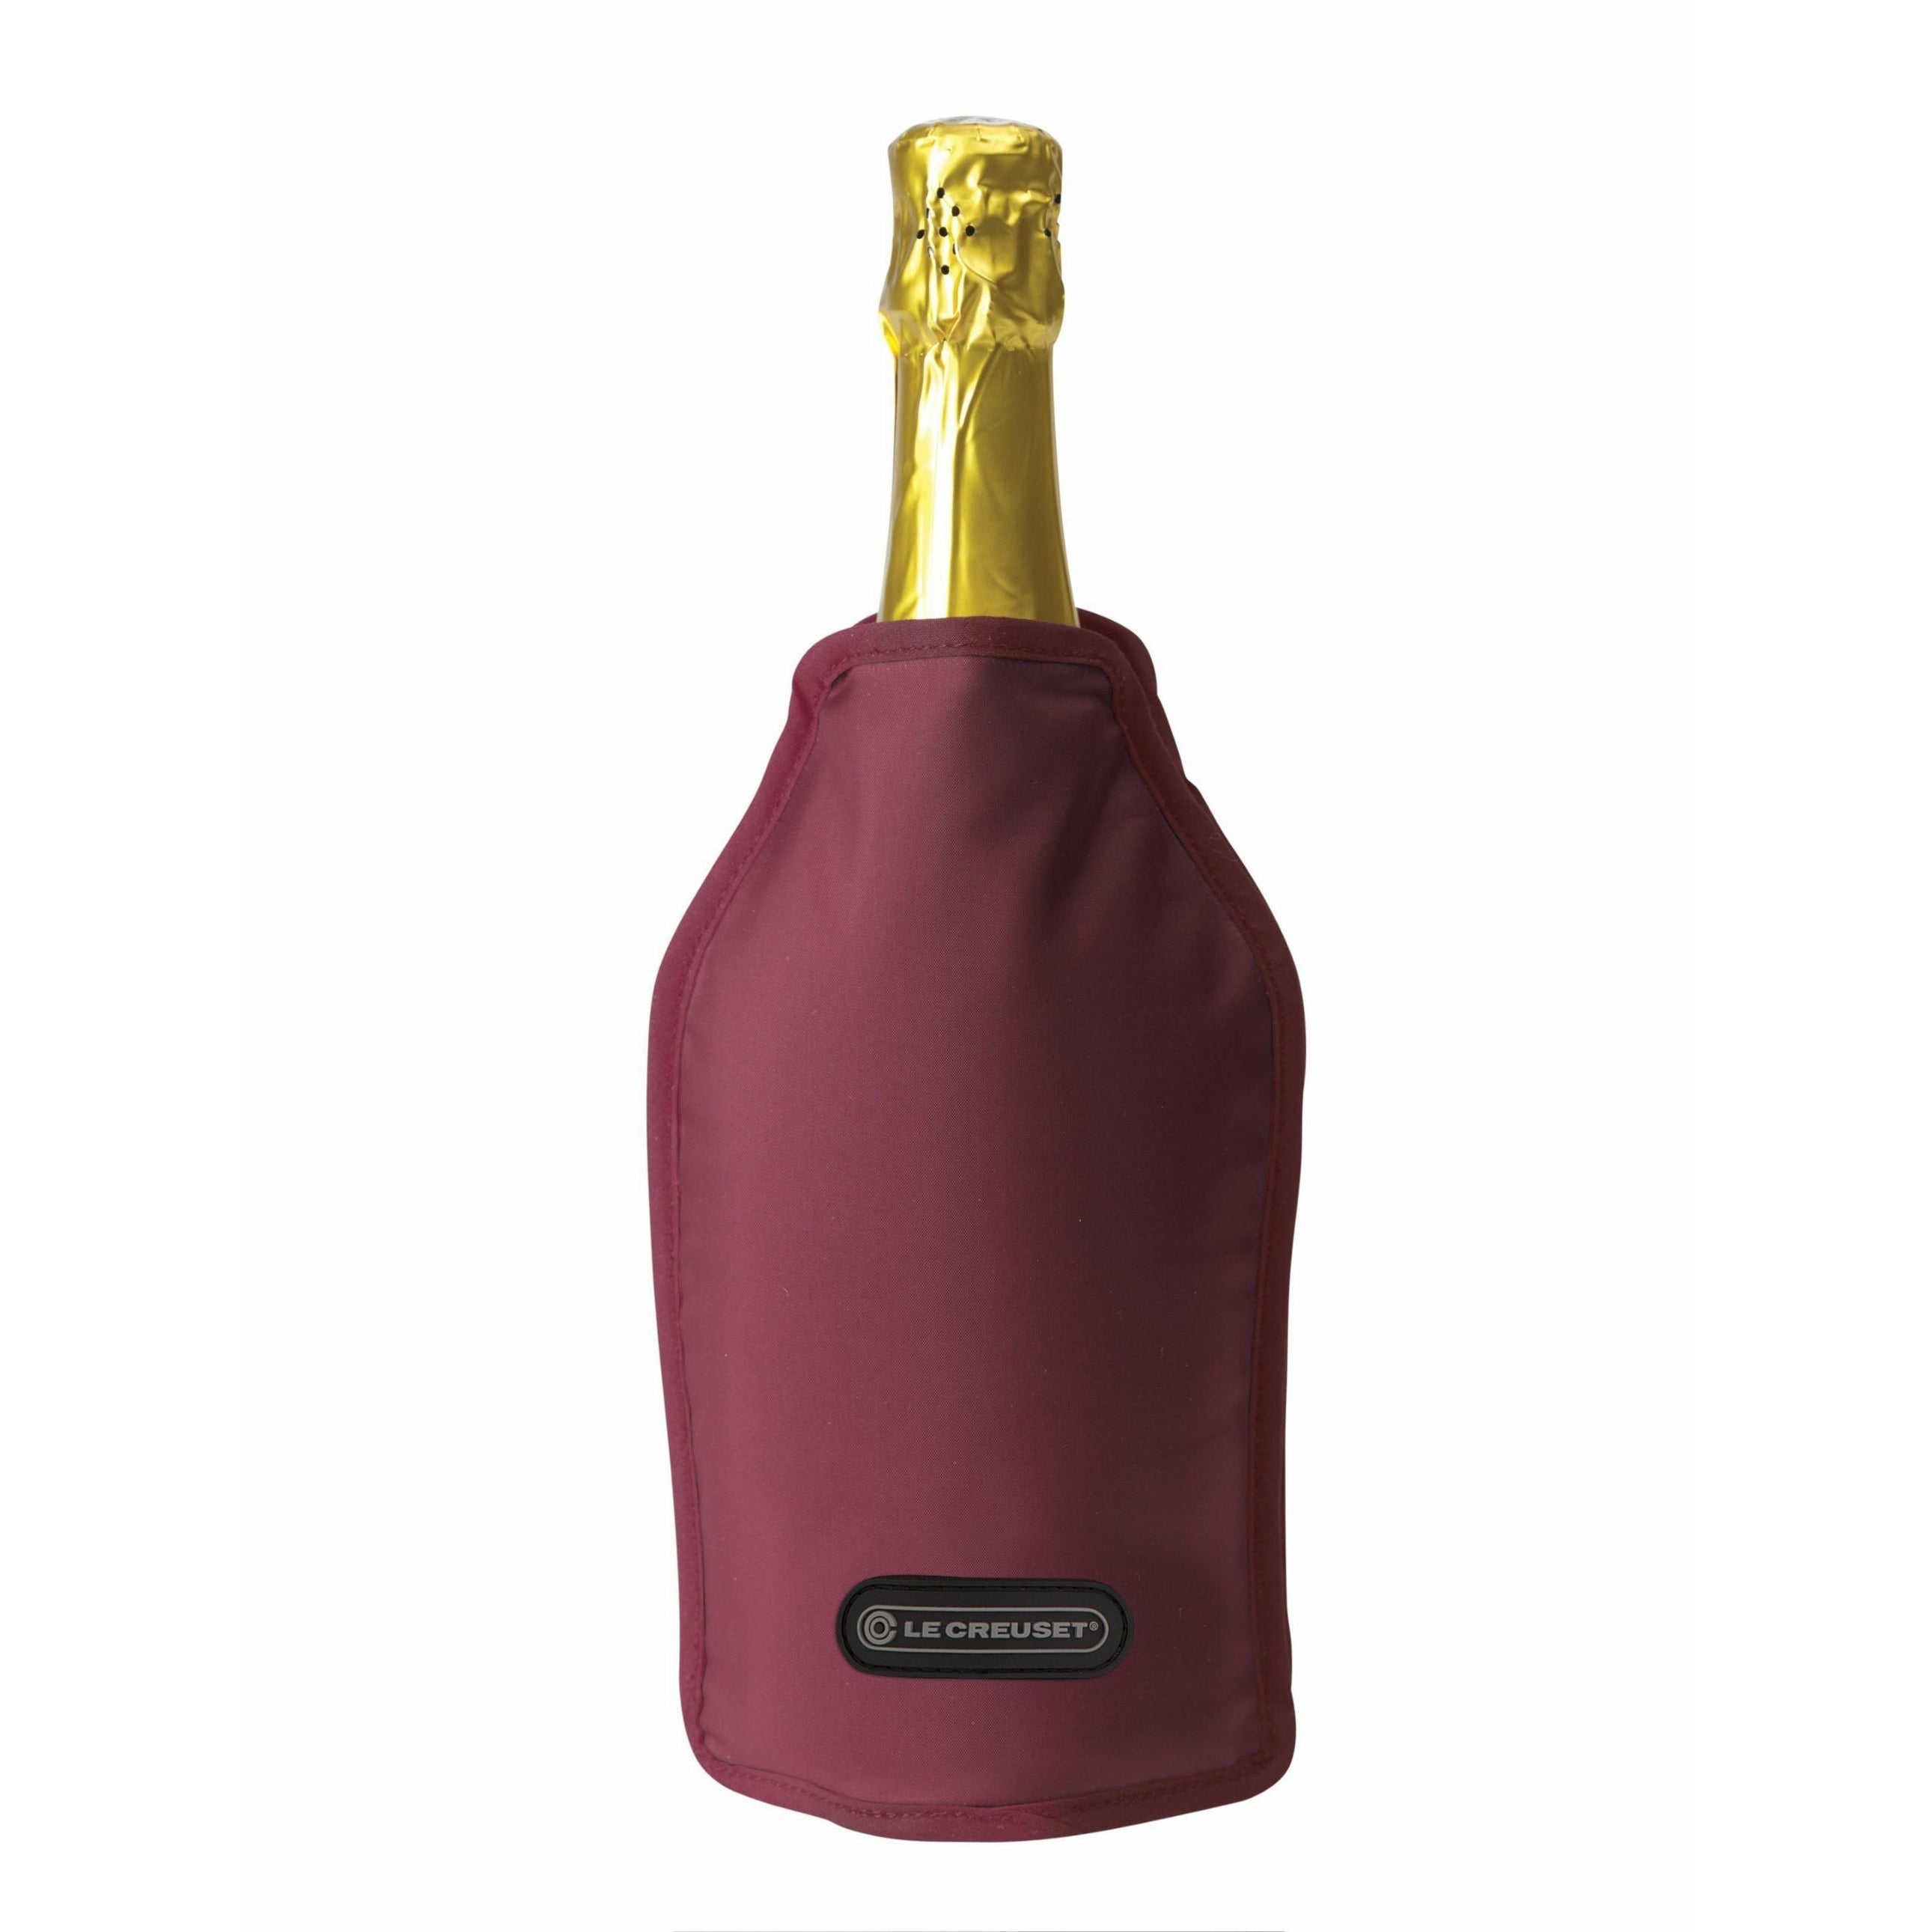 Le Creuset Wine Cooler Wa 126, Burgundy